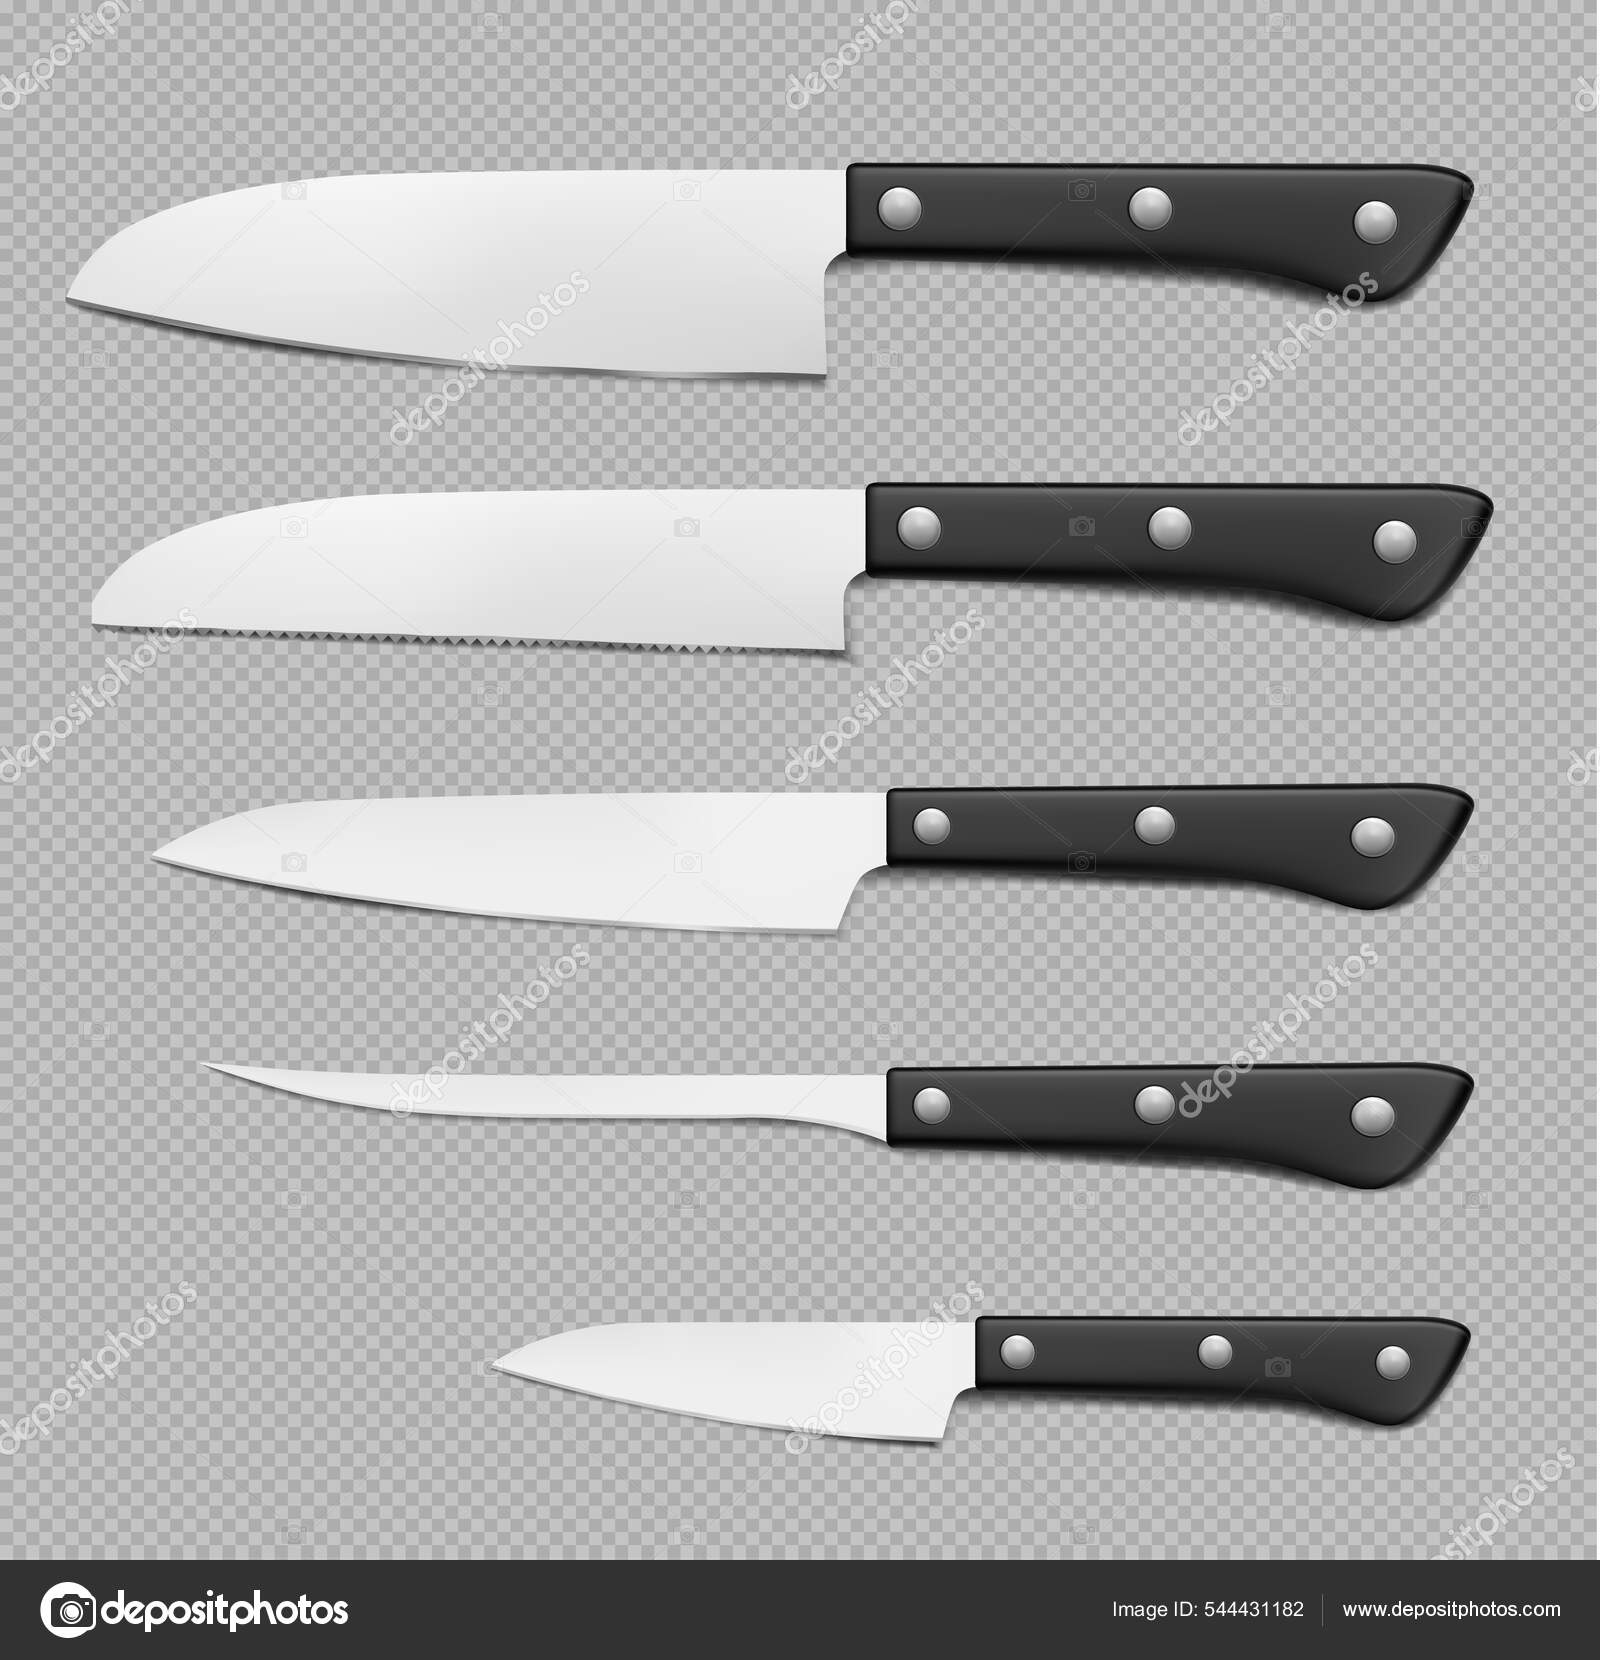 https://st.depositphotos.com/1001335/54443/v/1600/depositphotos_544431182-stock-illustration-sharp-kitchen-knives-set-plastic.jpg